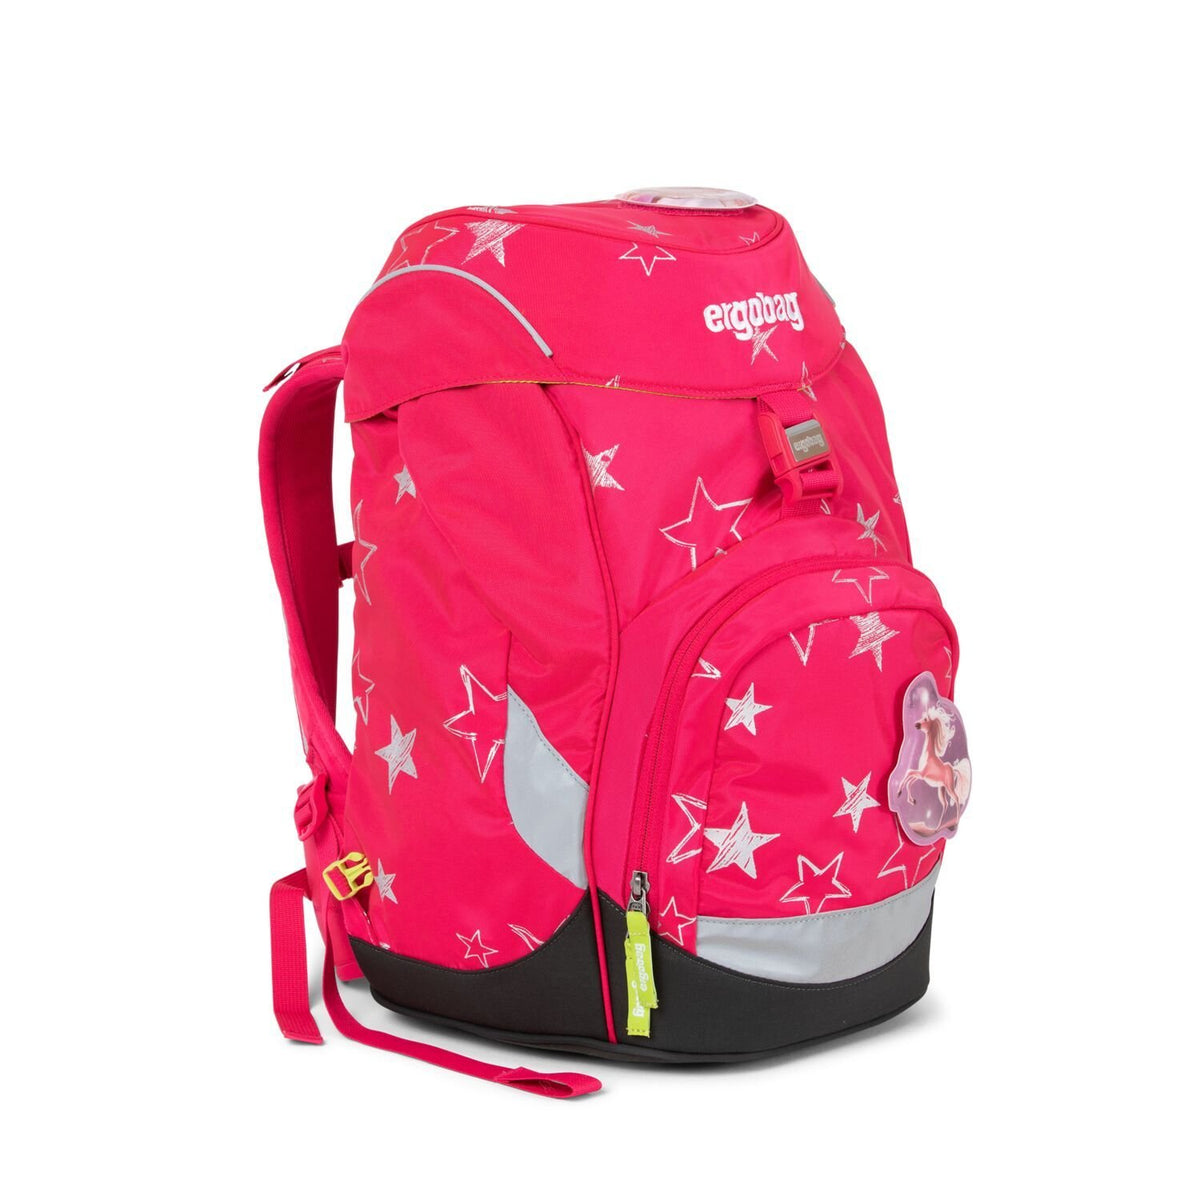 ergobag Prime School Bag Pink Stars for primary school